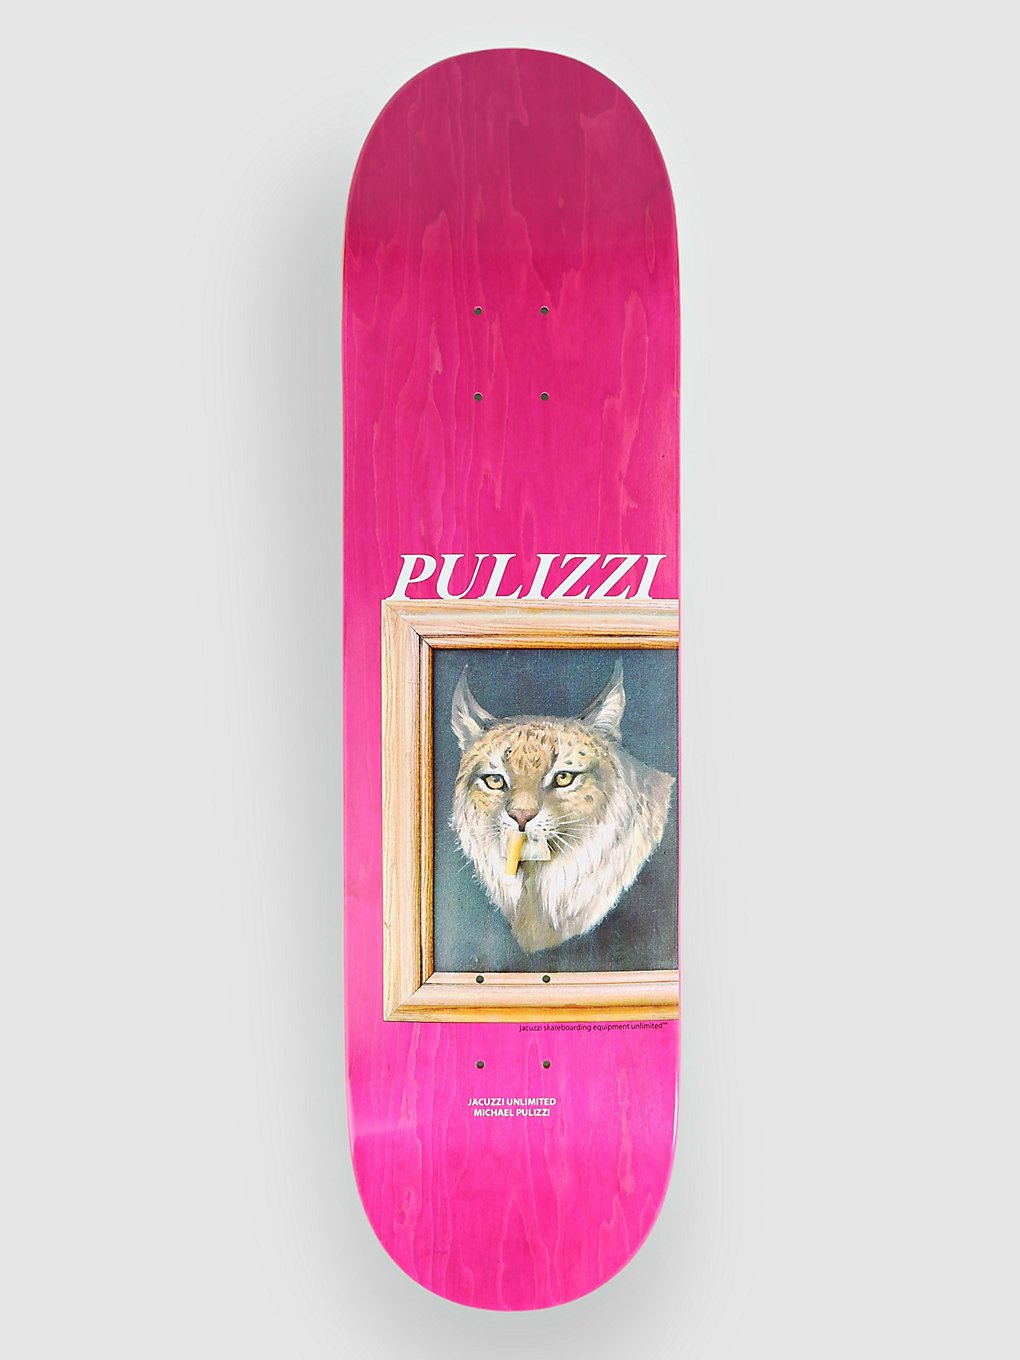 Jacuzzi Unlimited Michael Pulizzi Bobcat 8.375" Skateboard Deck pink kaufen